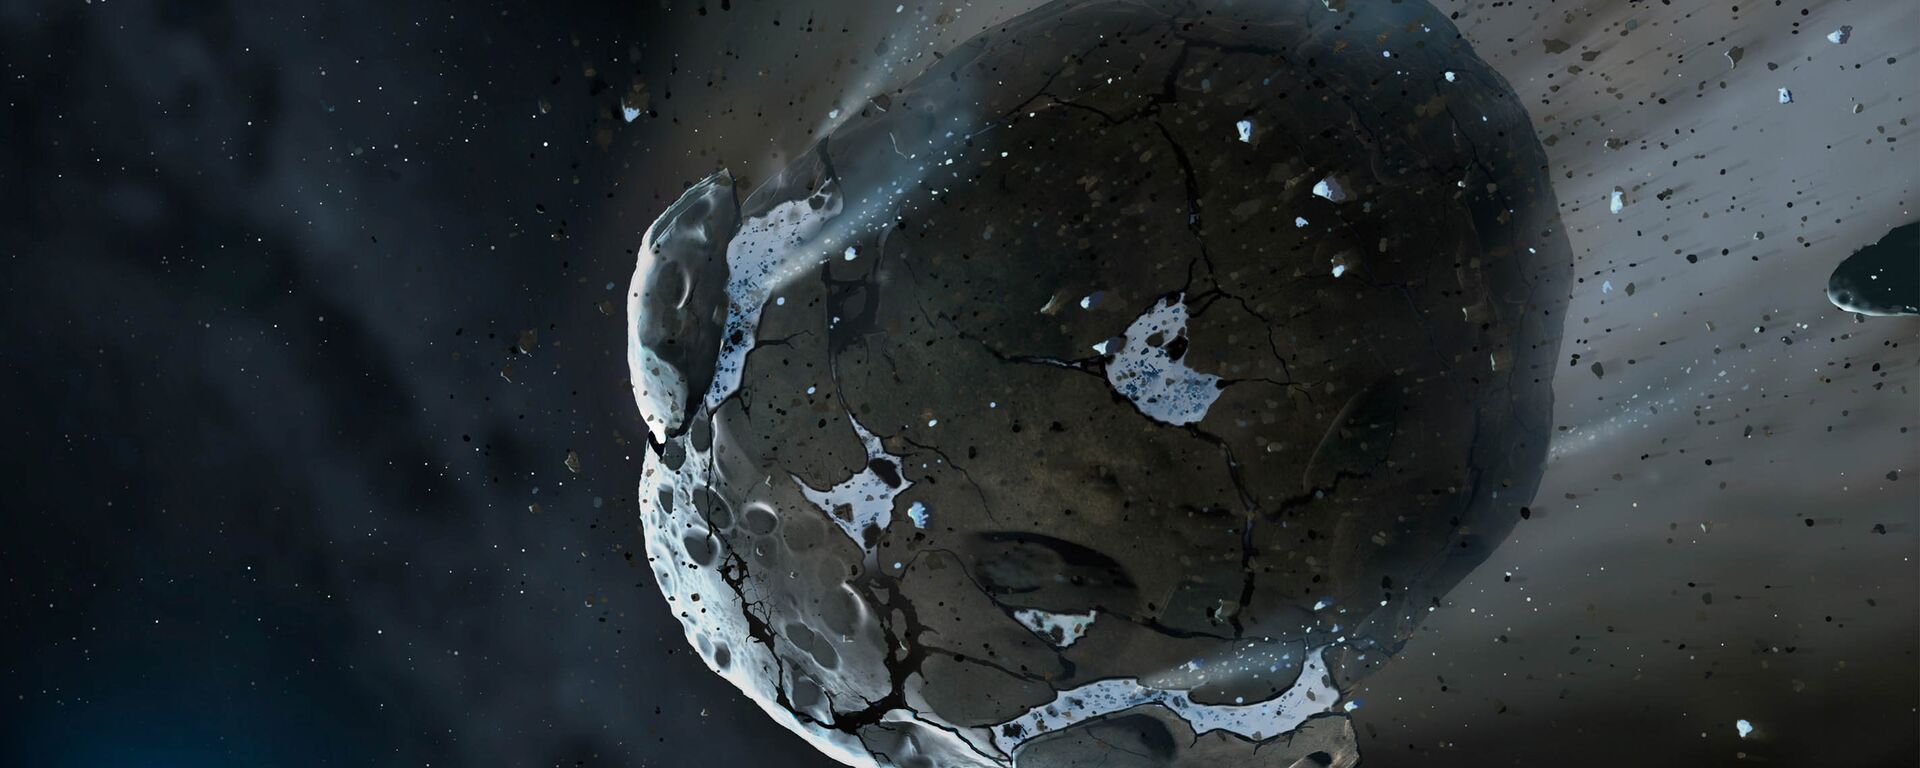 Астероид, архивное фото - Sputnik Արմենիա, 1920, 20.03.2021